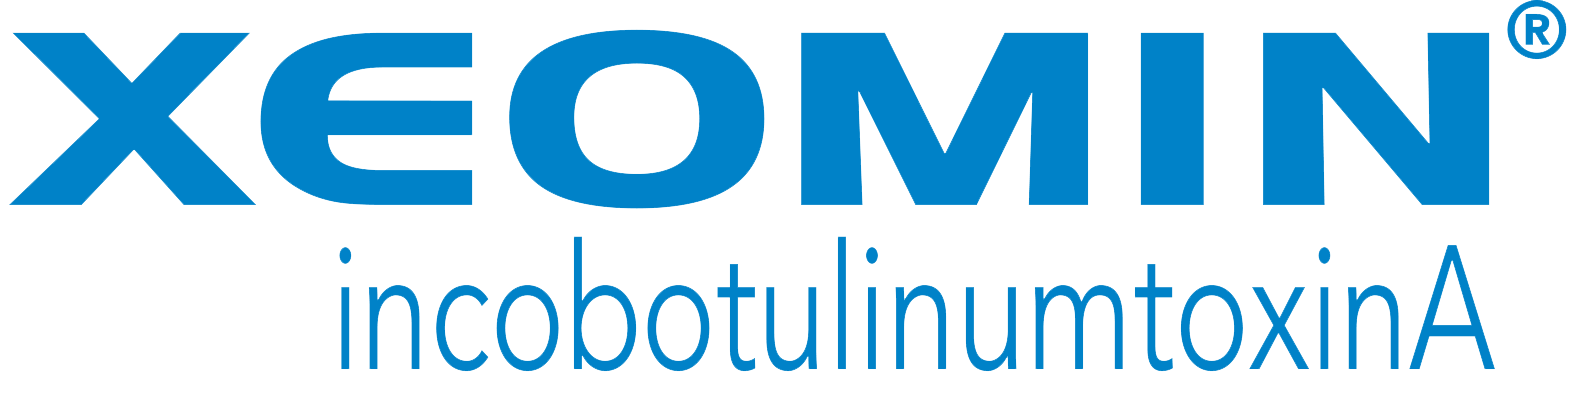 XEOMIN logo